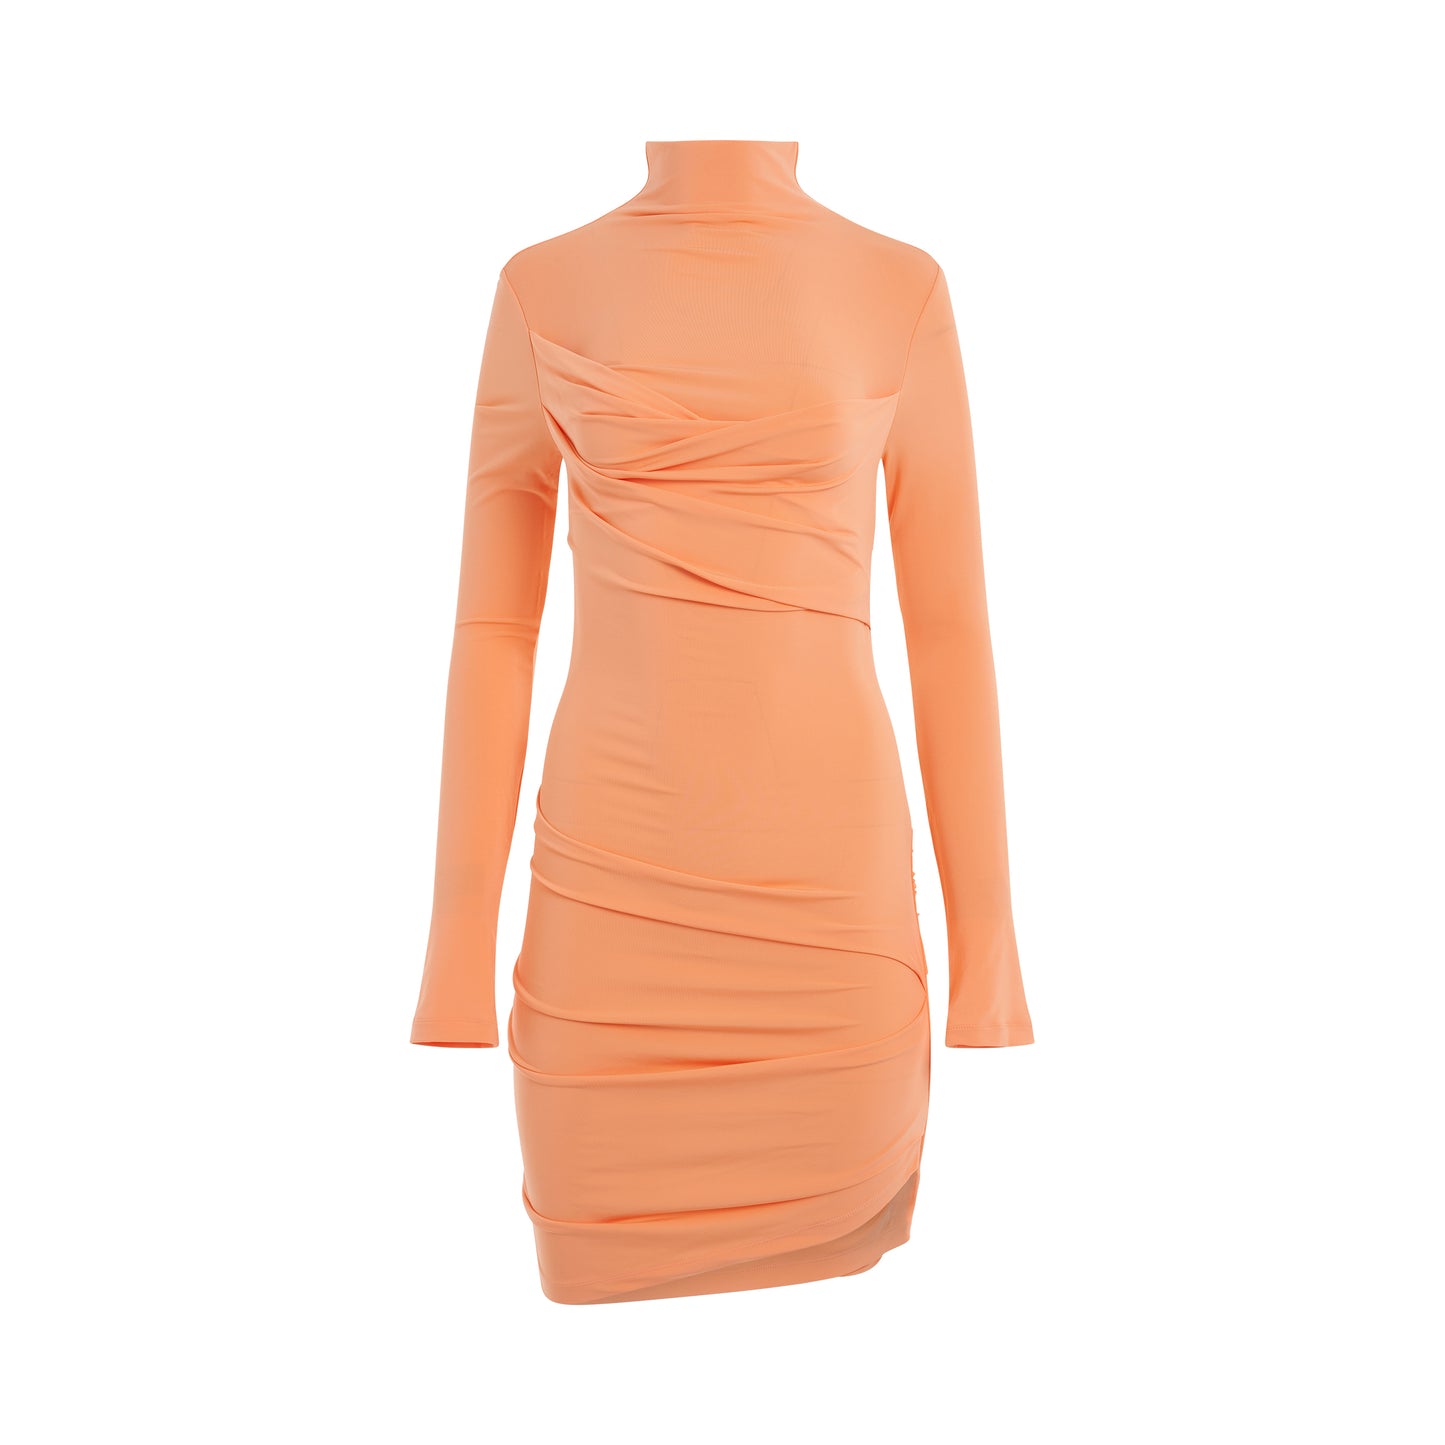 Viscose Crepe Twist Long Sleeve Dress in Peach/Orange